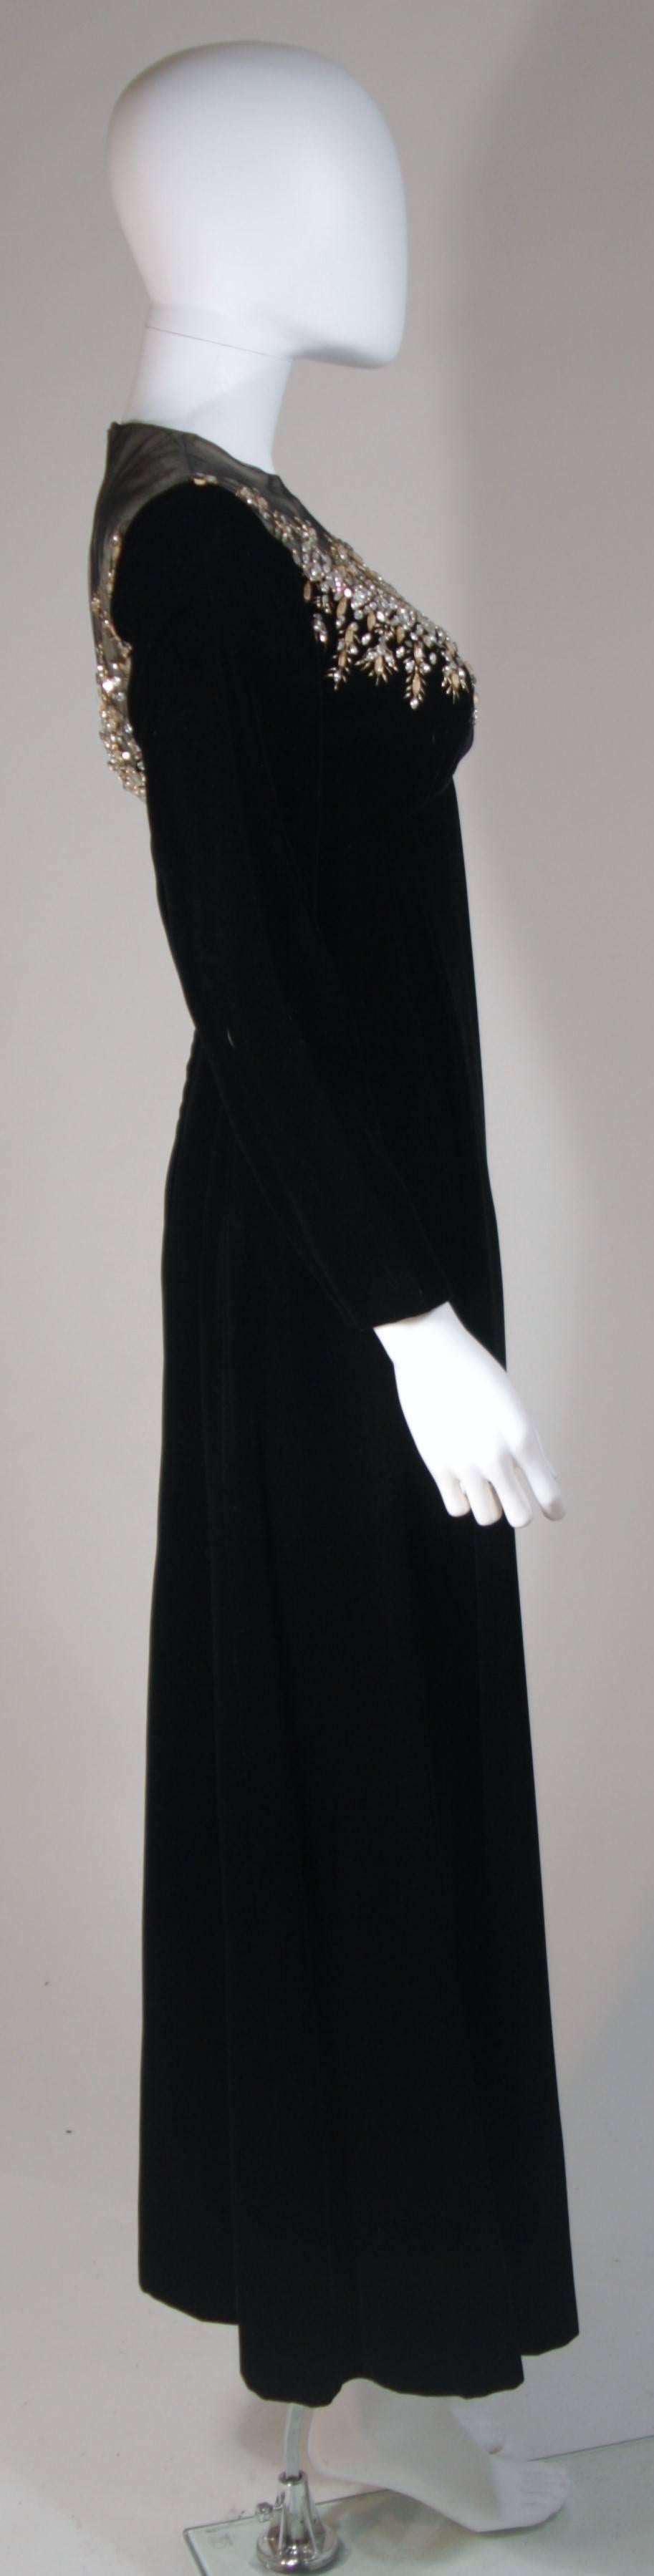 MALCOLM STARR Black Velvet Gown with Sheer Neckline & Rhinestone Applique Size 8 2